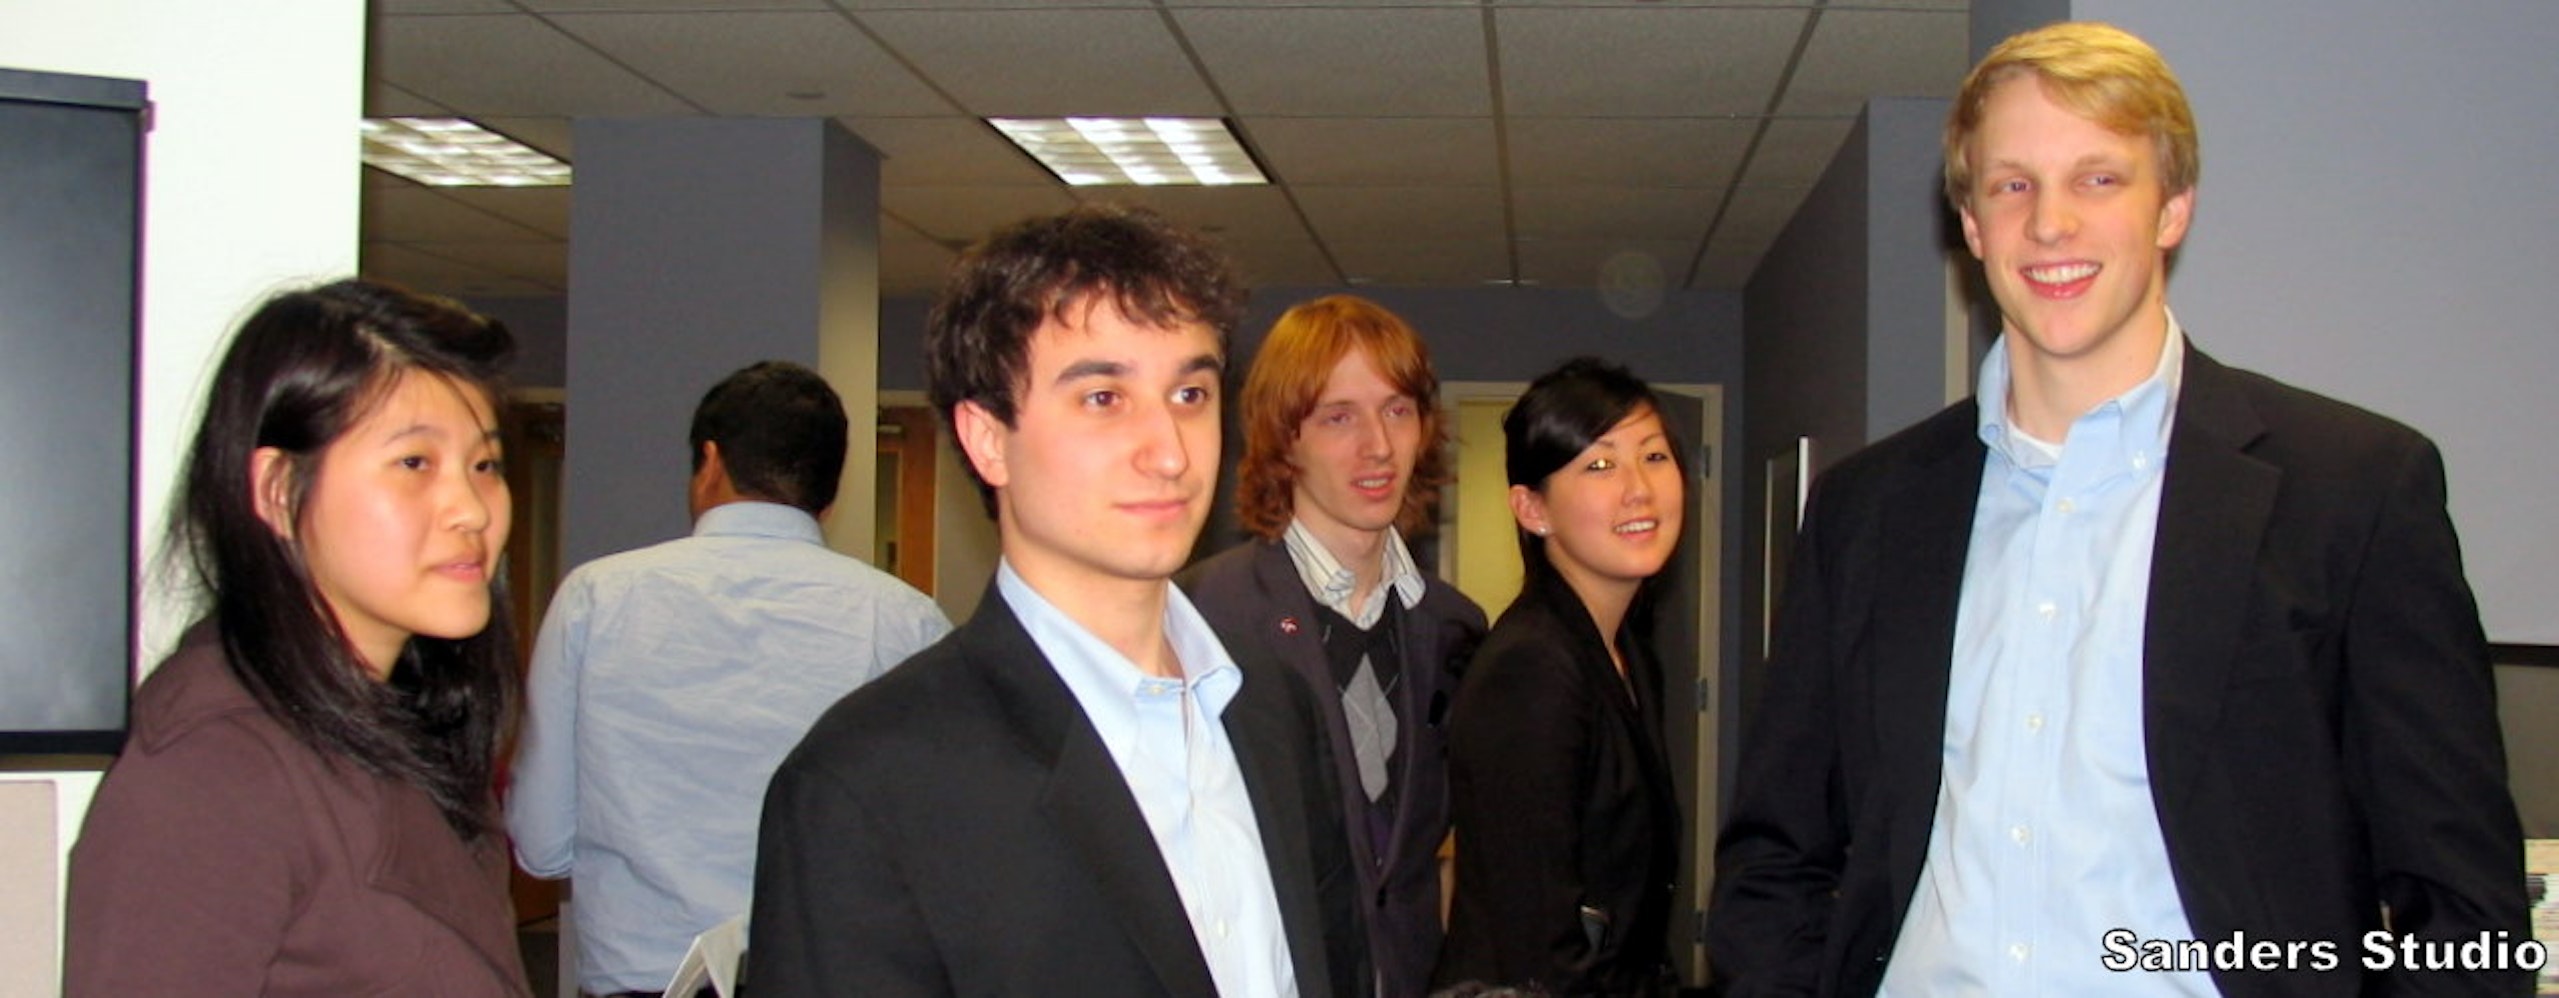 Zprava Jared (CEO), Ginger (Client Servis Co-Director), já, Noam (Strategy Co-Director) a Deb